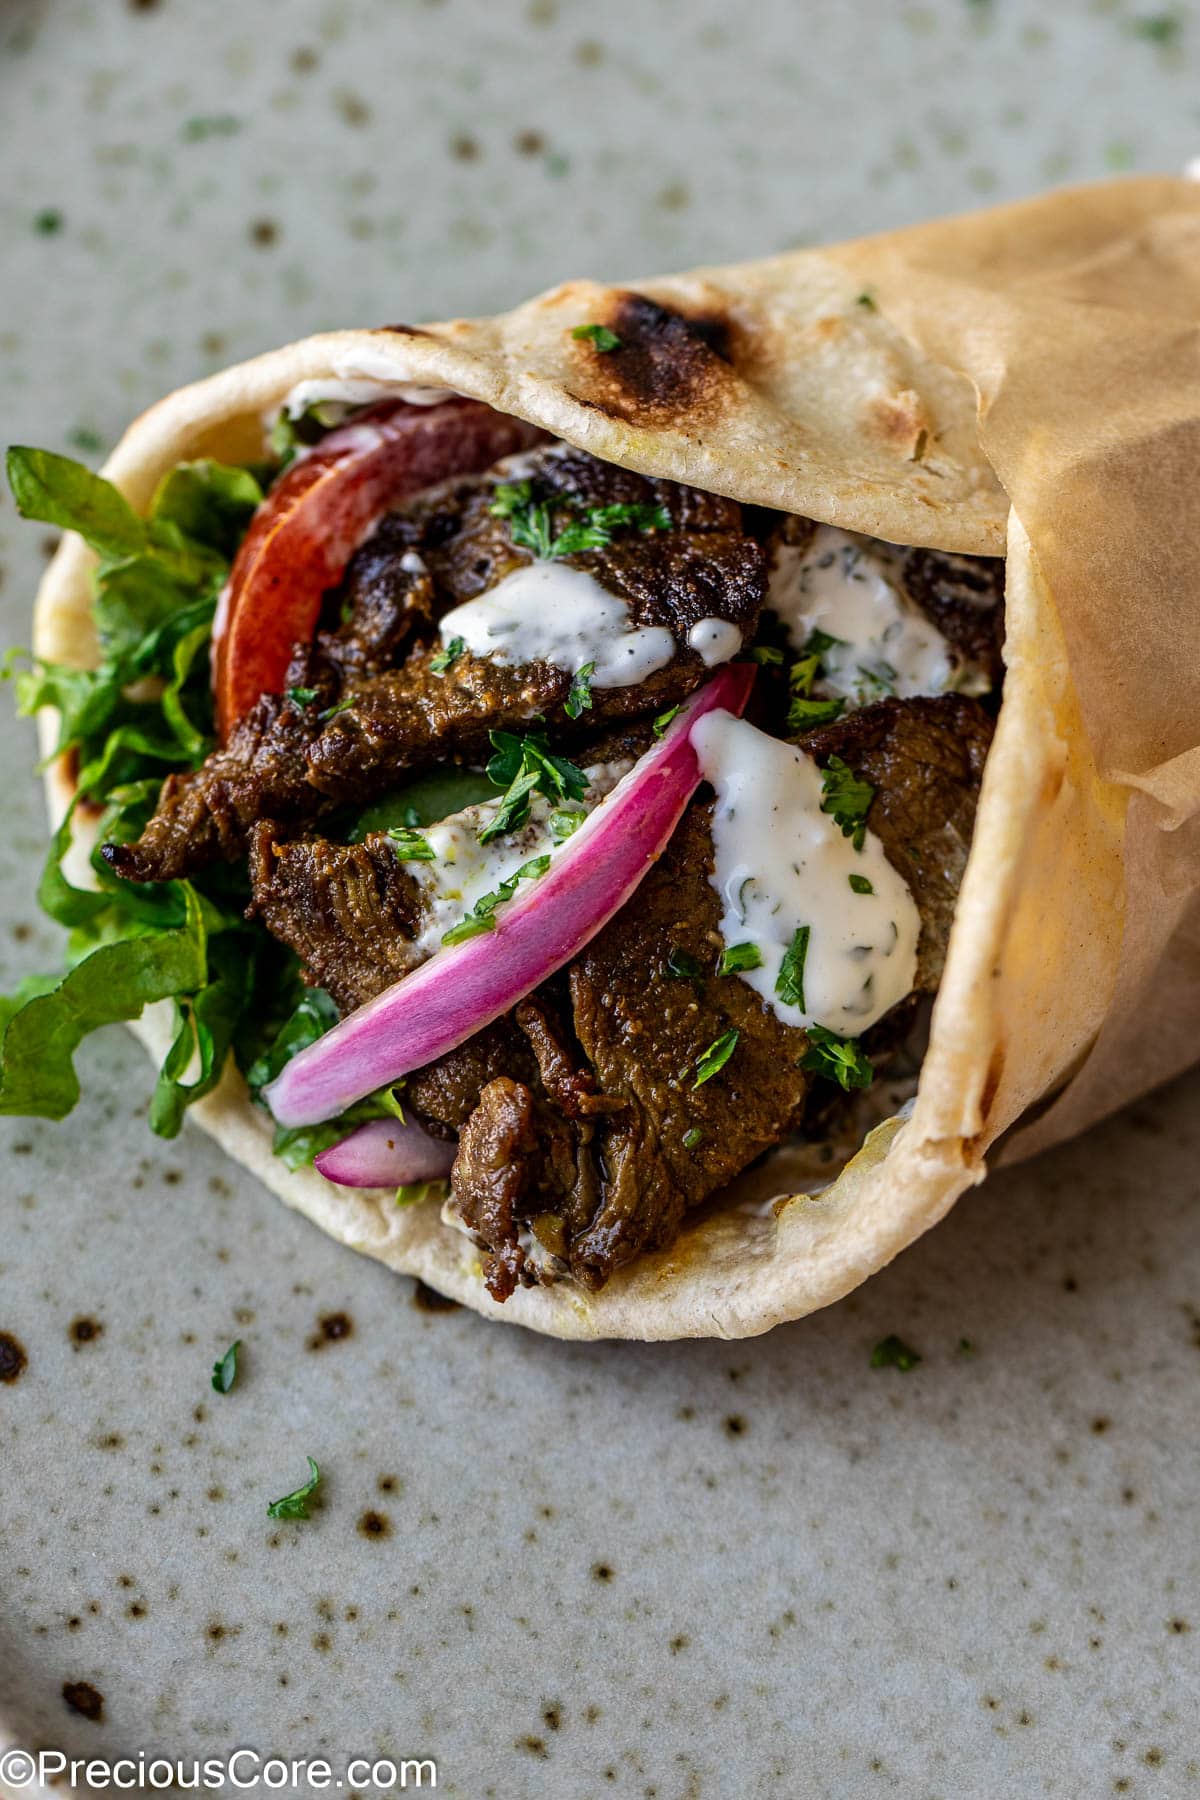 Beef shawarma wrap with veggies and sauce.